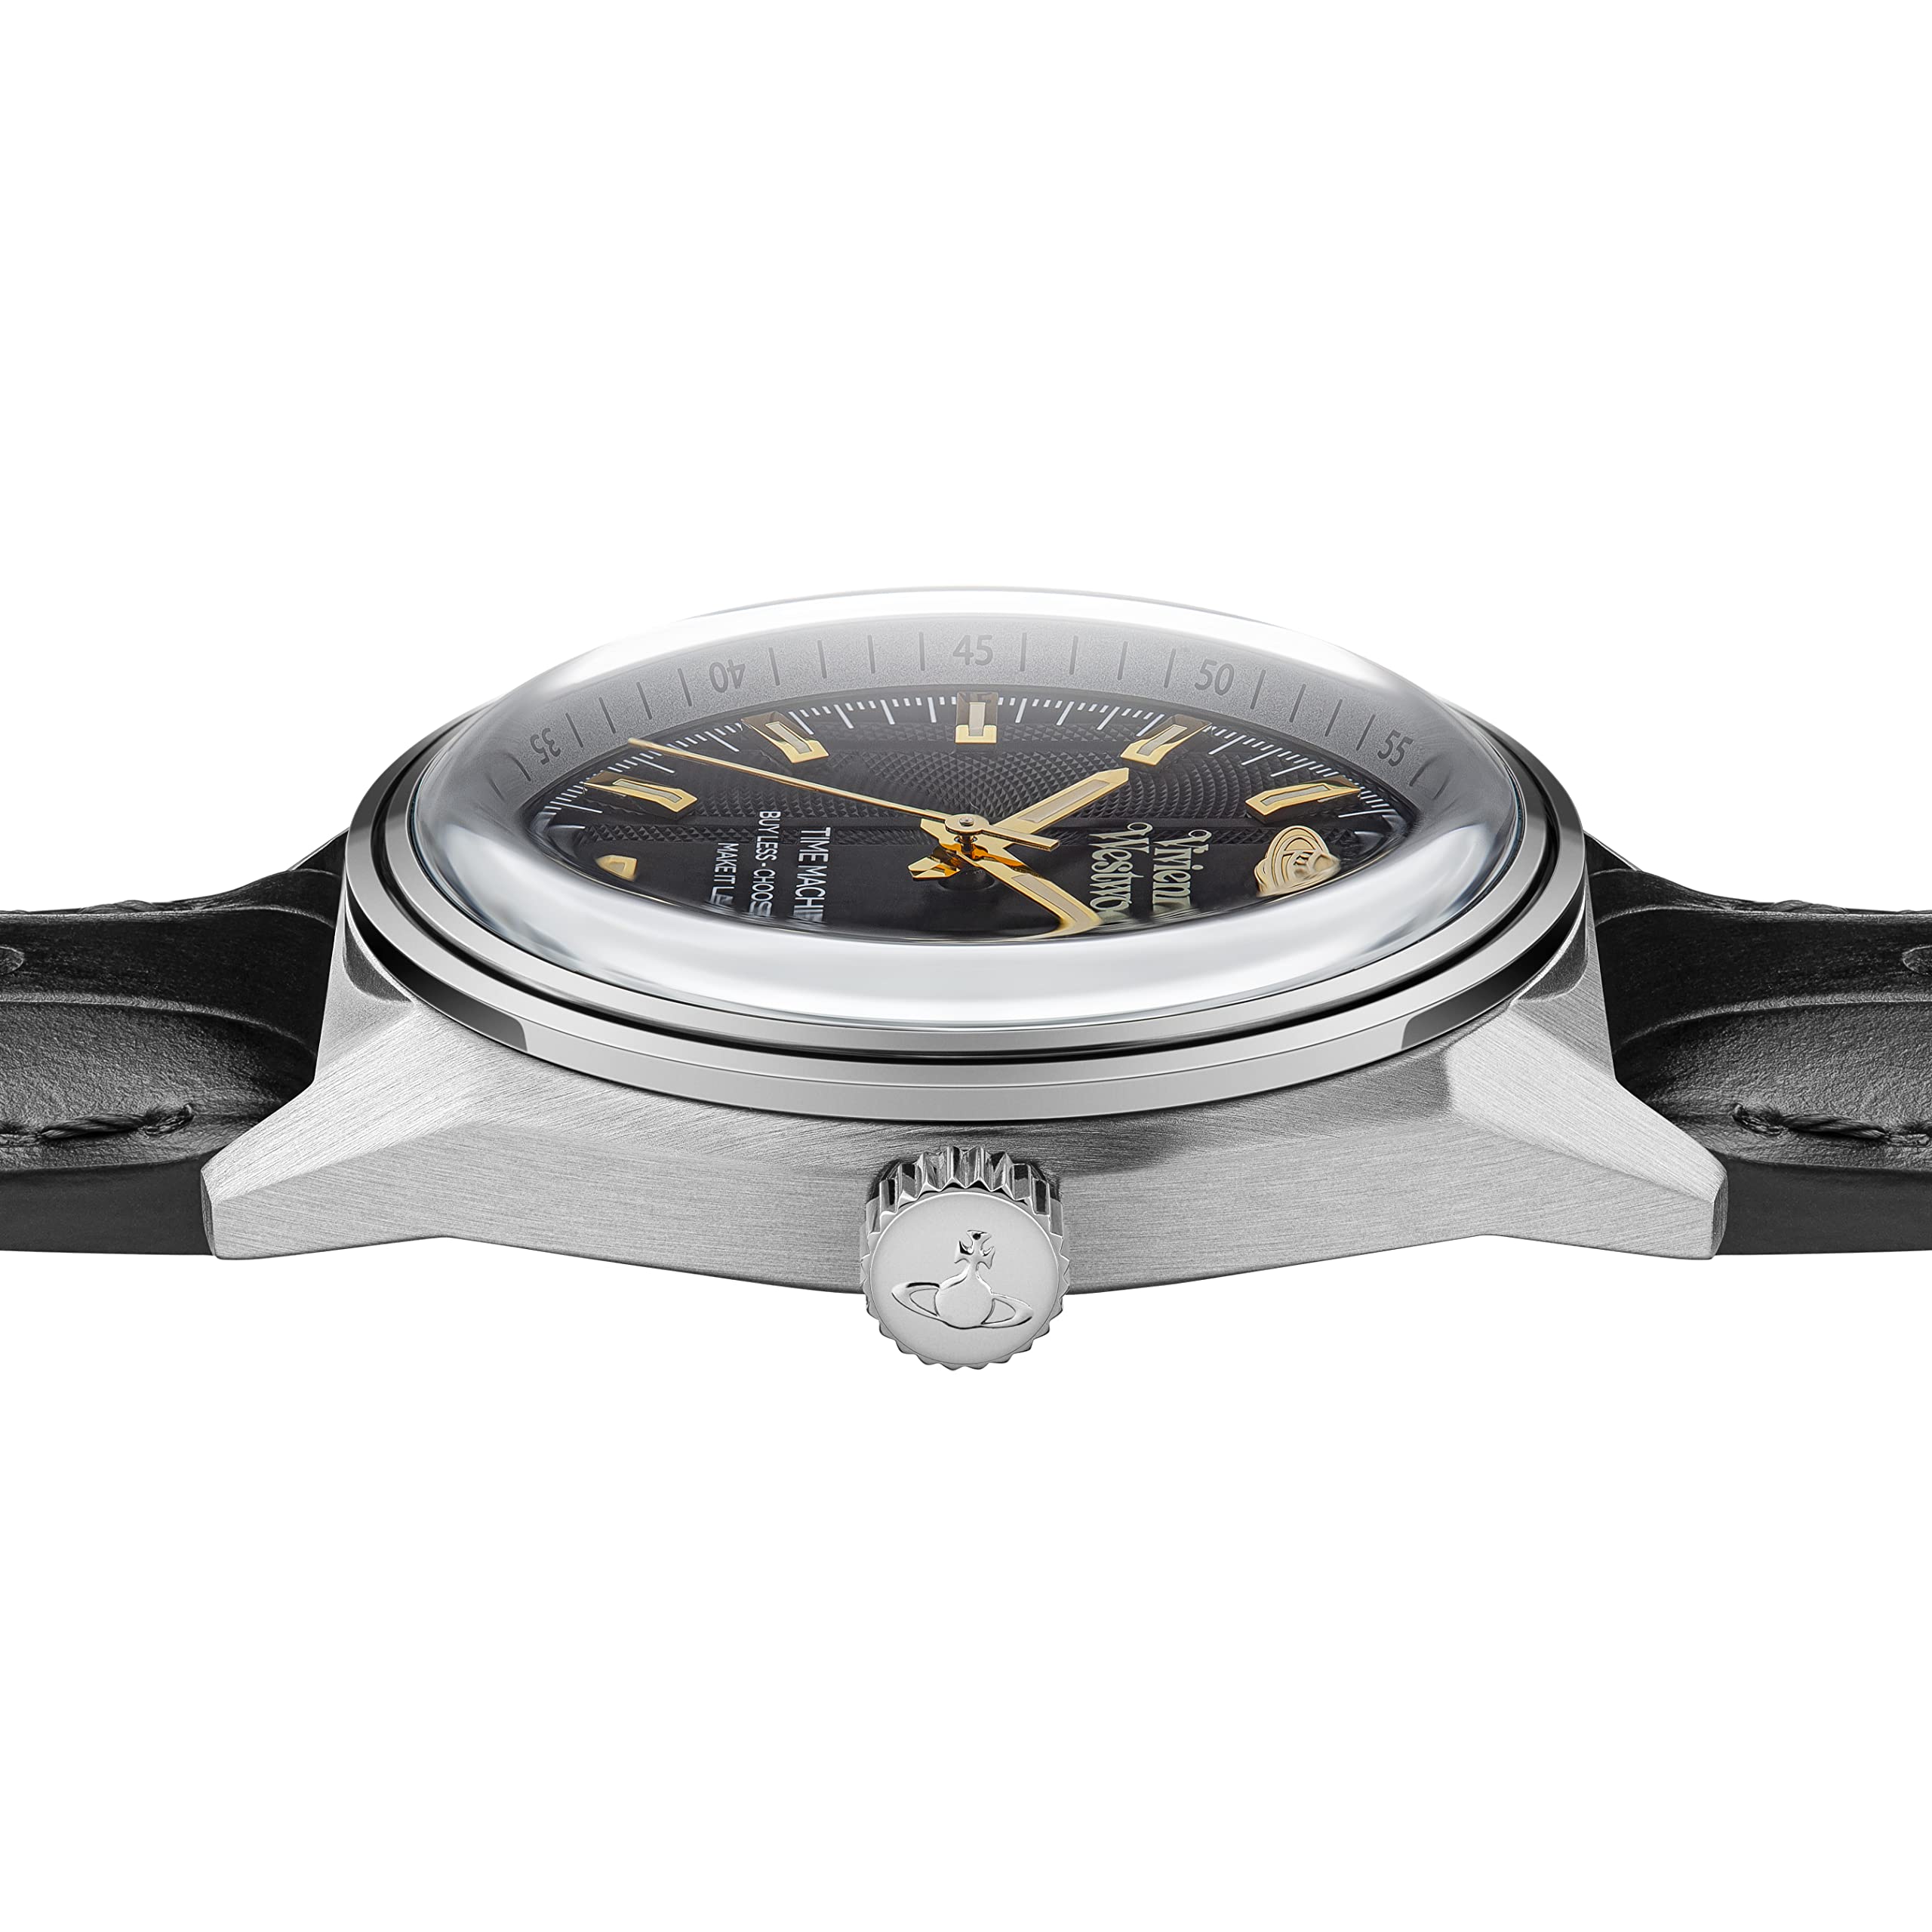 Vivienne Westwood Sydenham Mens Quartz Watch with Black Dial & Leather Strap or Silver Stainless Steel Bracelet